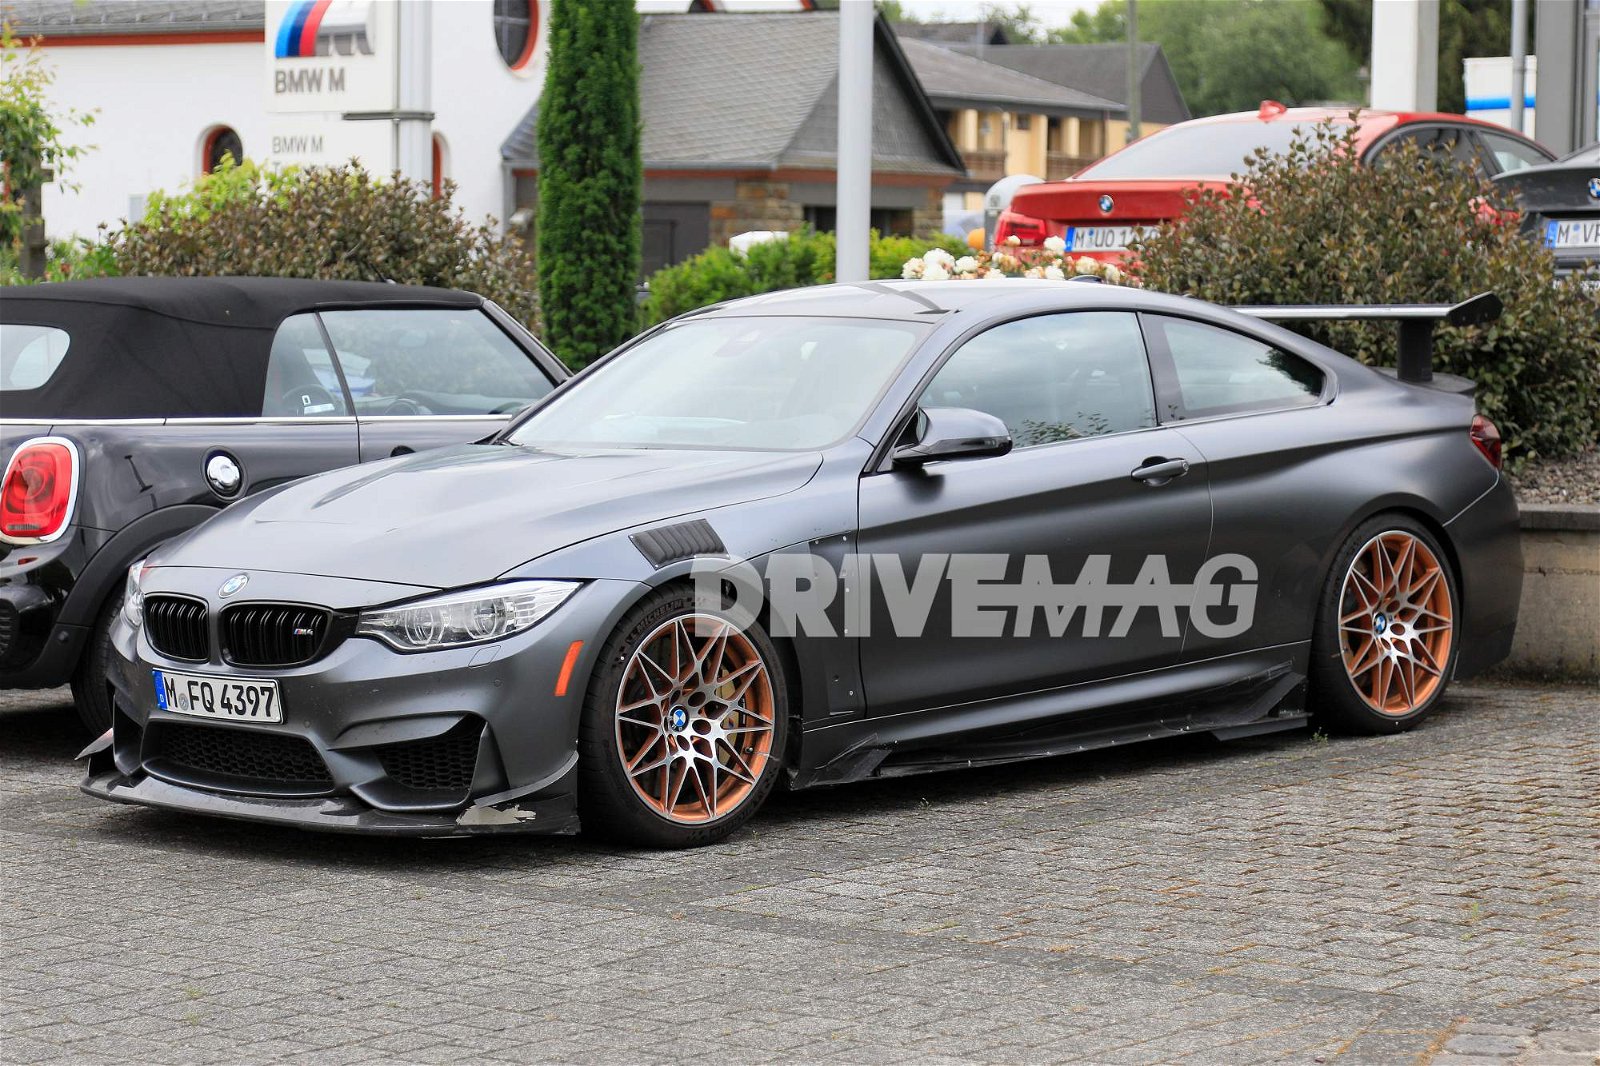 Extreme-BMW-M4-GTS-prototype-spied-14